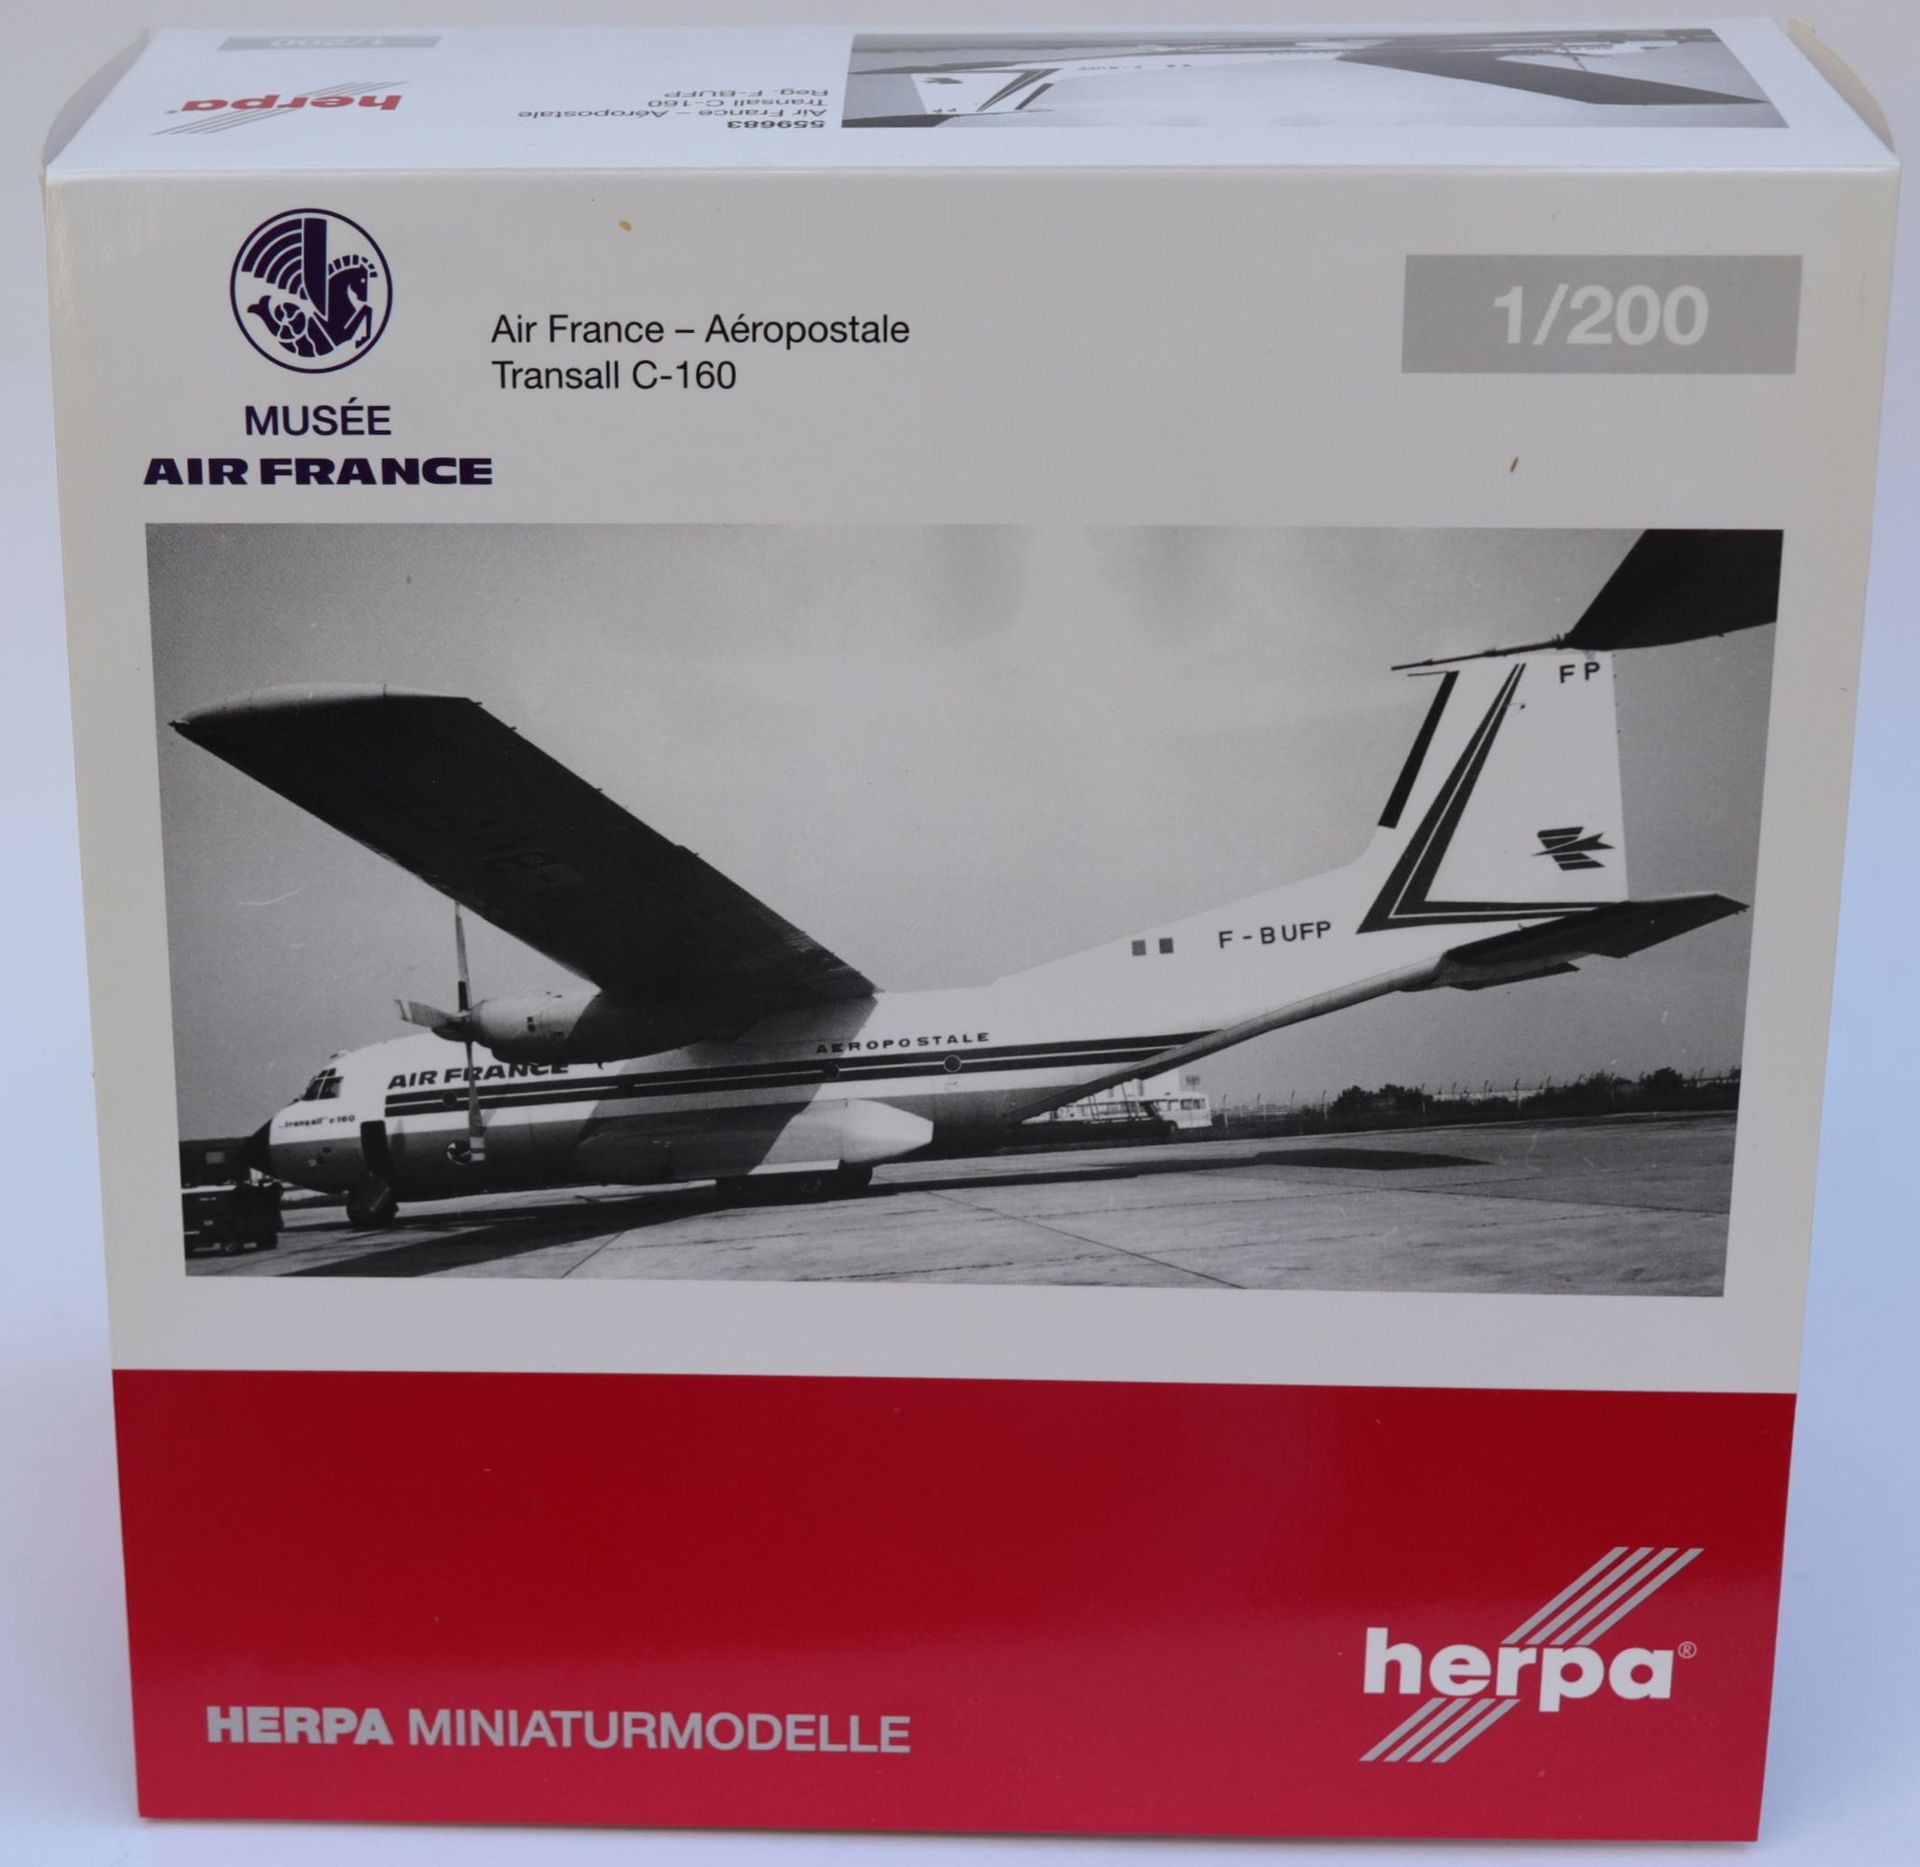 Null TRANSALL C-160 Aéropostale AIR FRANCE.

Druckgussmodell von HERPA in 1/200.&hellip;